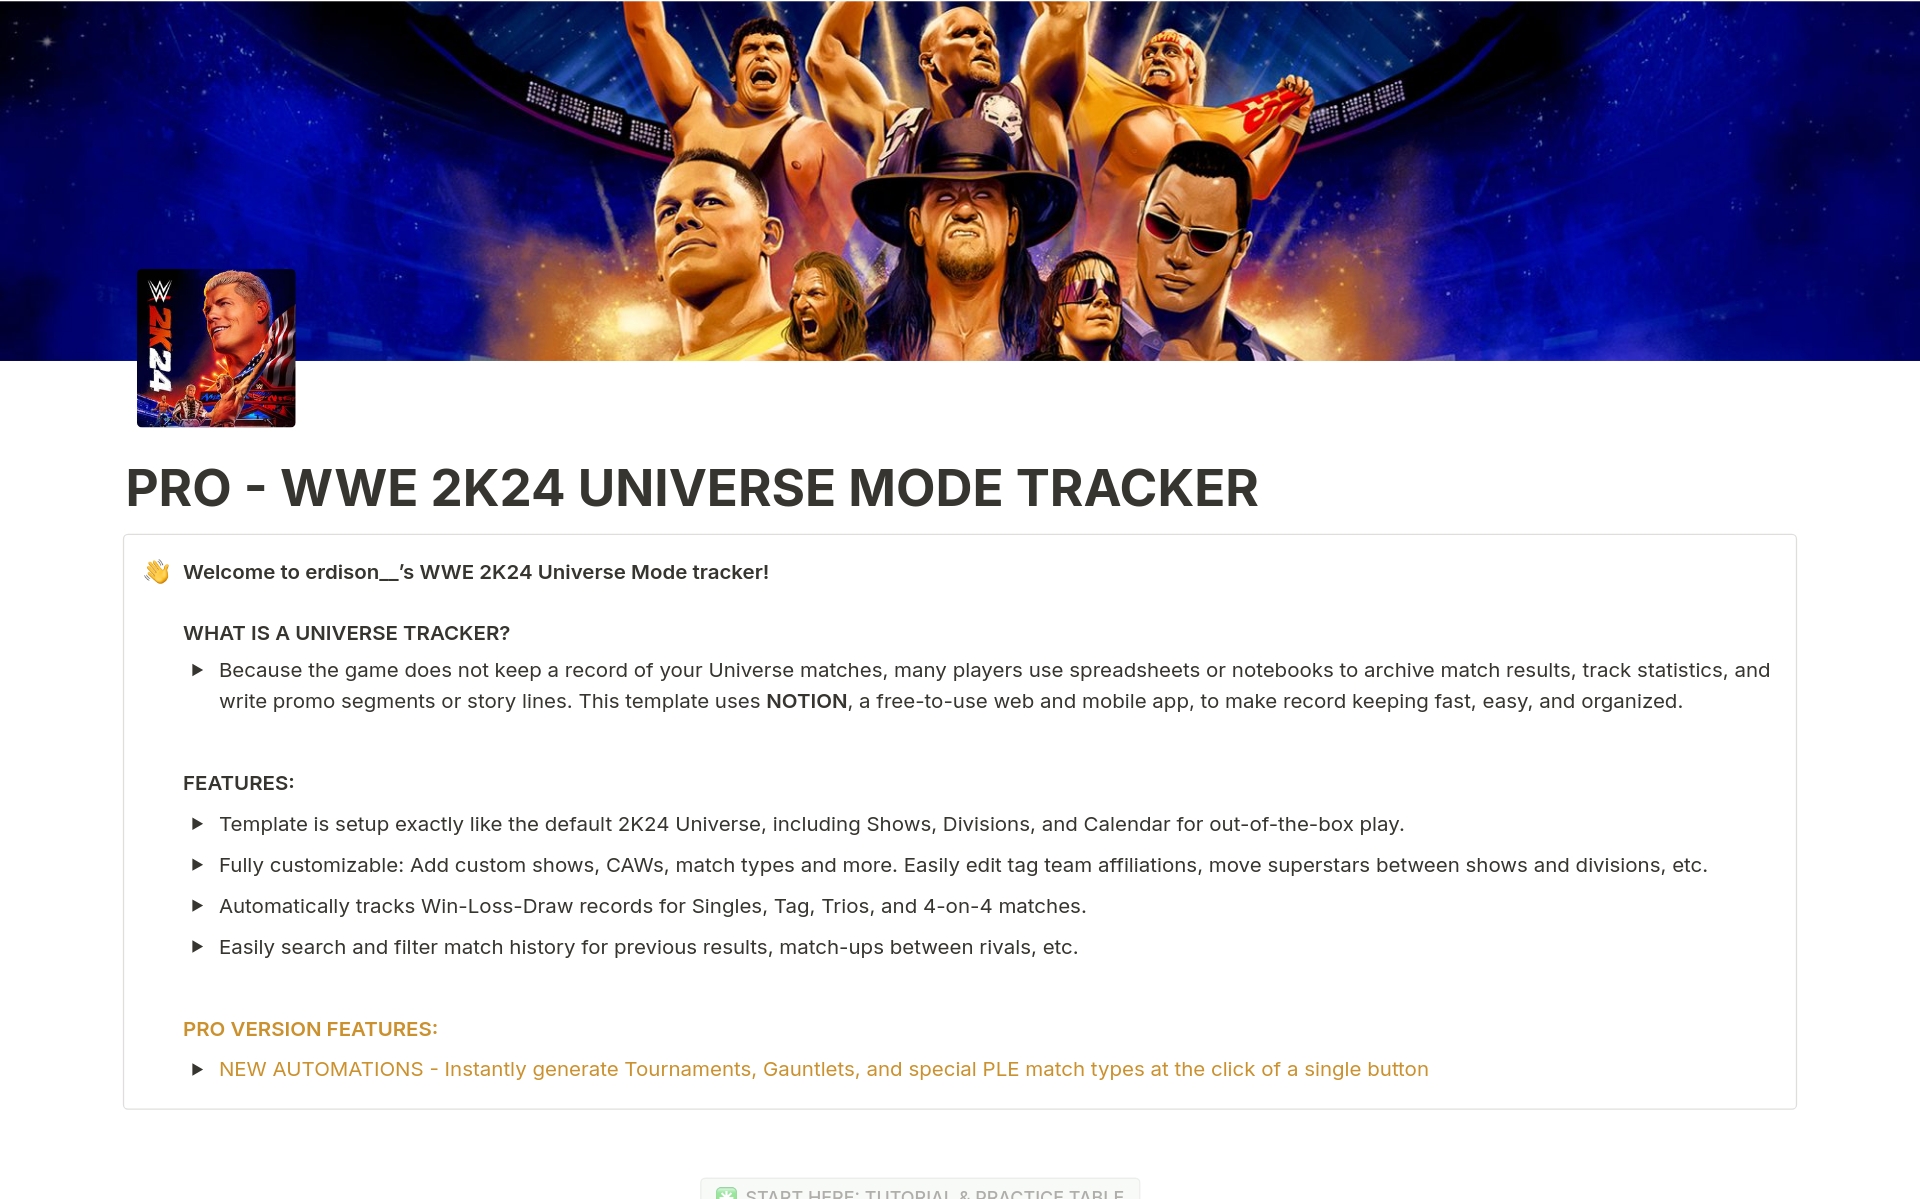 Vista previa de una plantilla para PRO - WWE 2K24 Universe Mode Tracker